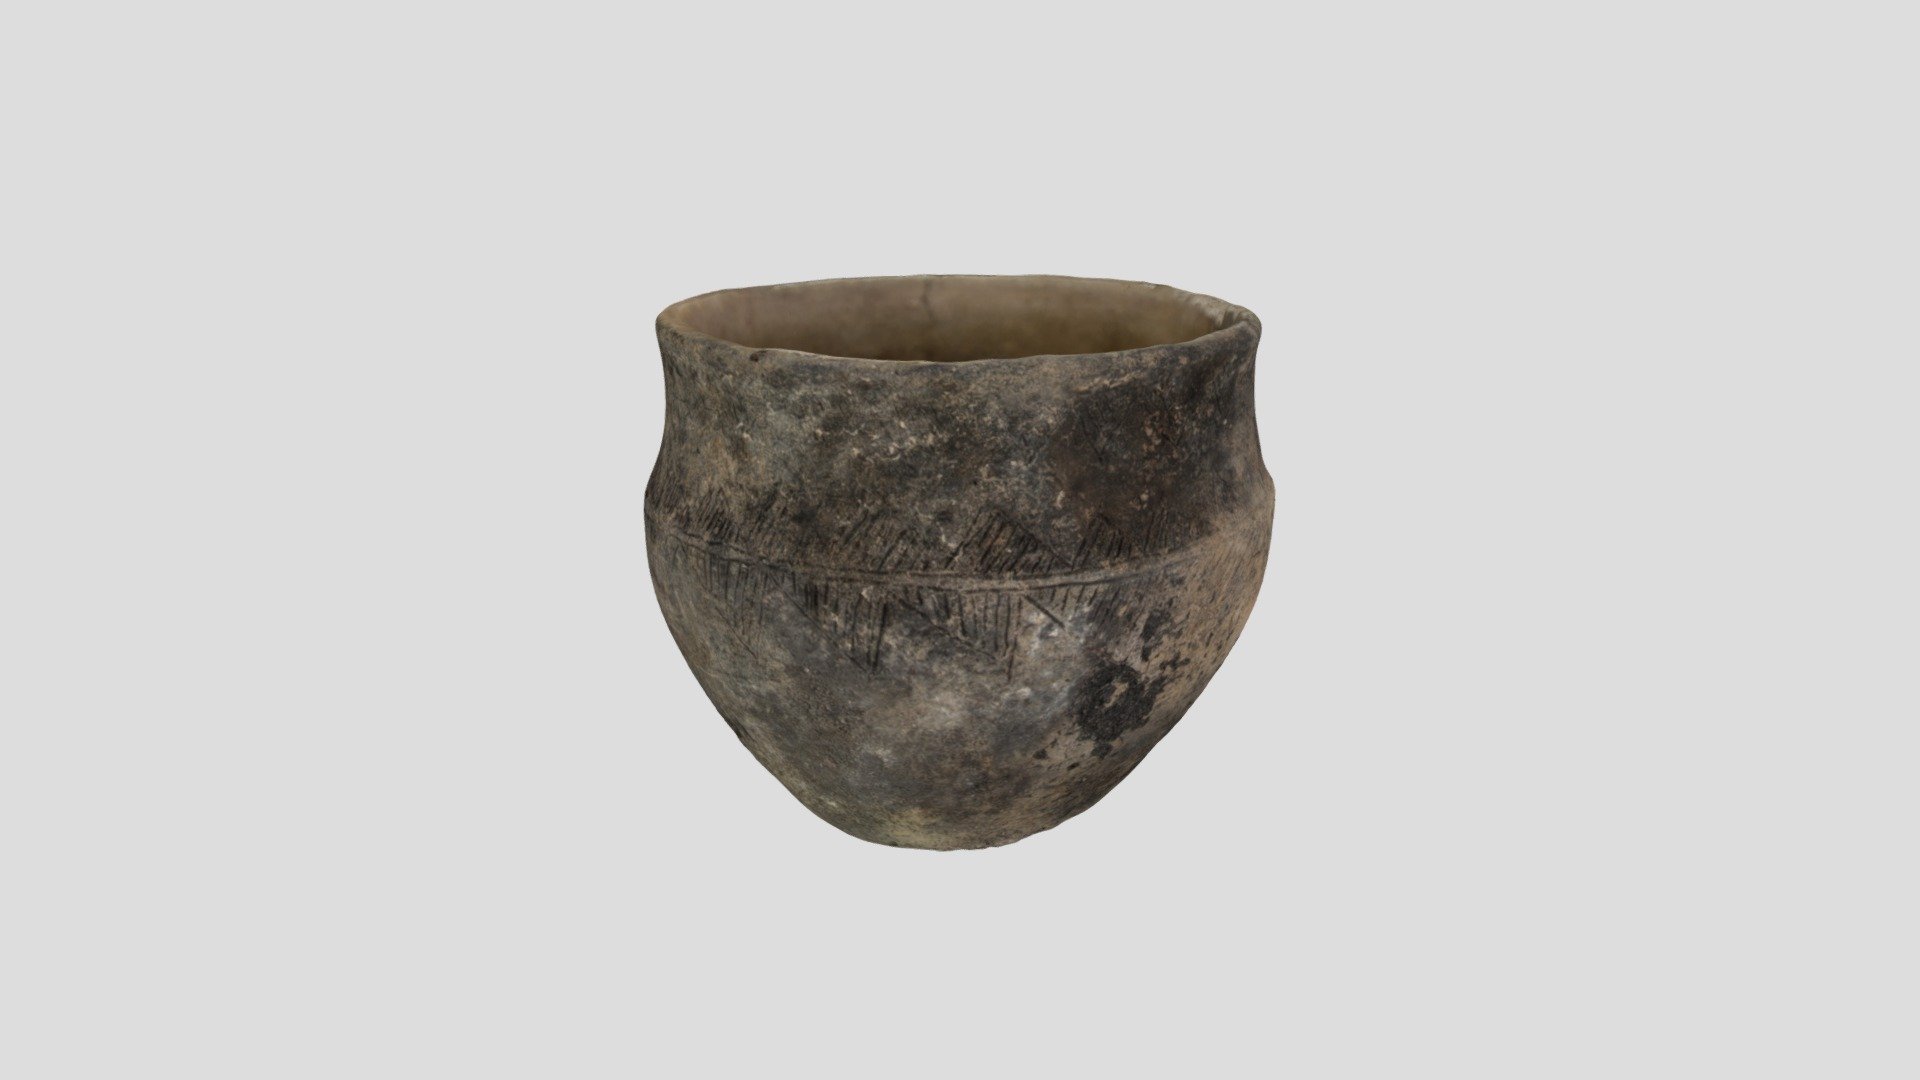 Ornamented ceramic vessel